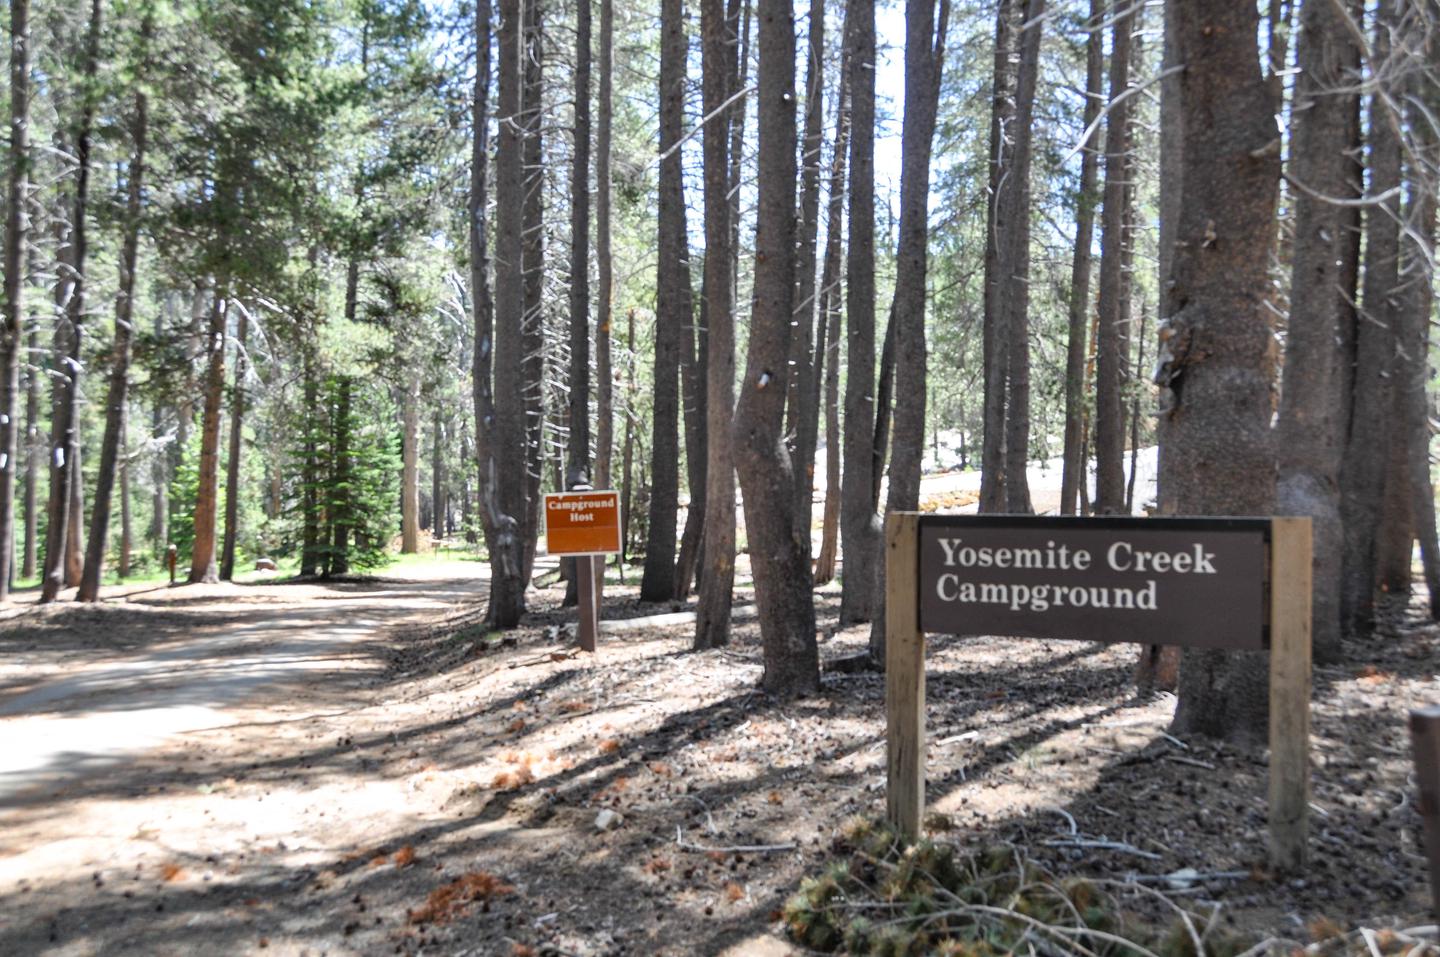 Yosemite Creek CampgroundThe entrance to Yosemite Creek Campground